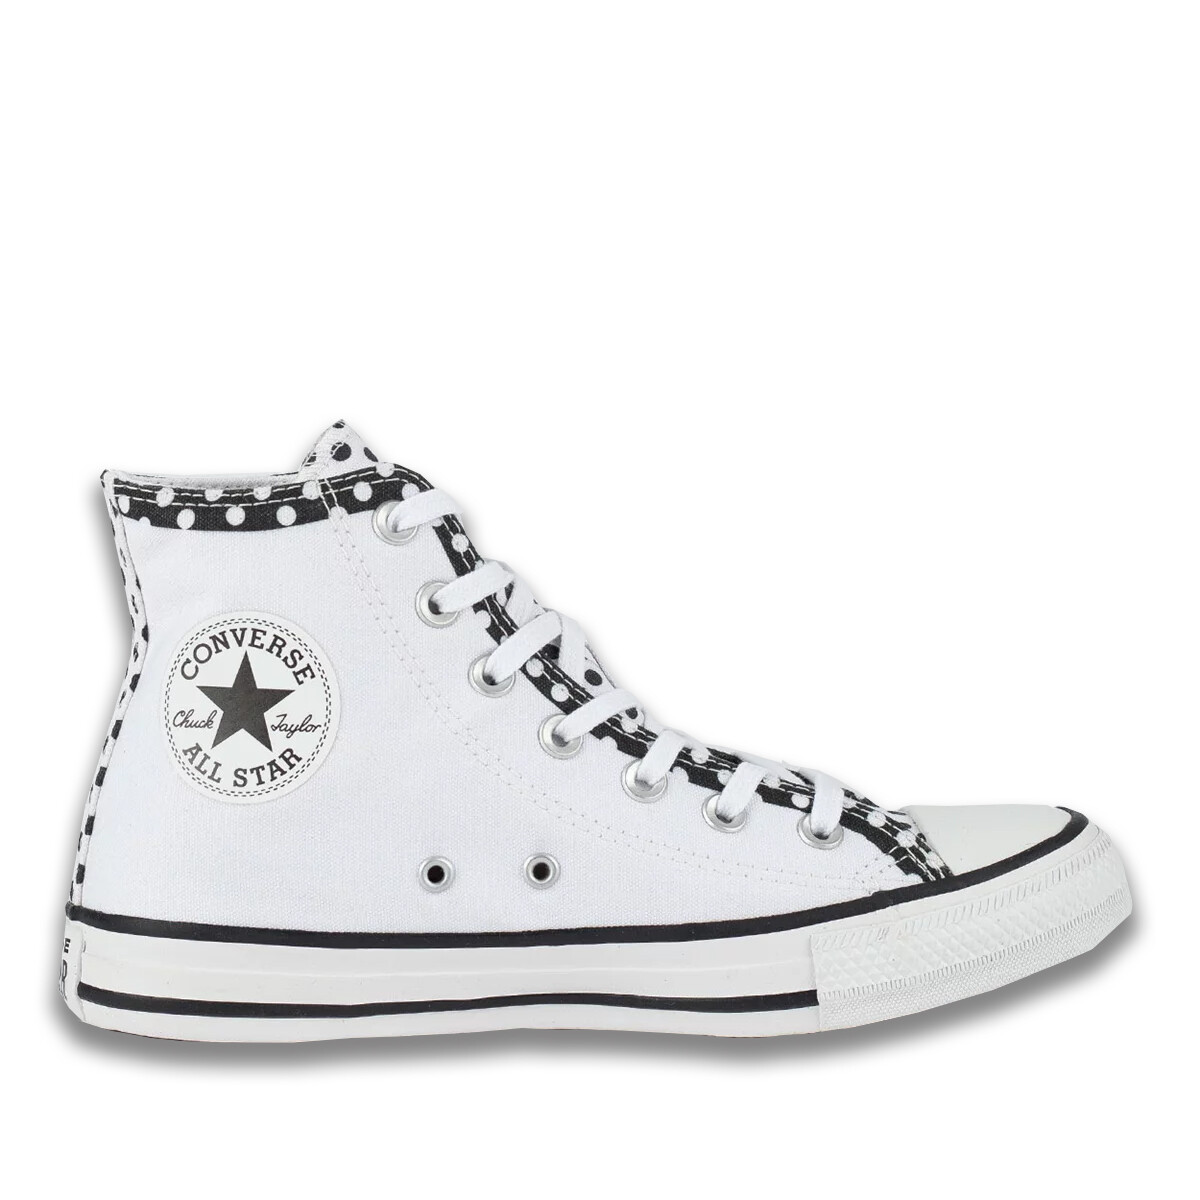 Champion Converse - CHUCK TAYLOR ALL STAR - A02636C - WHITE 